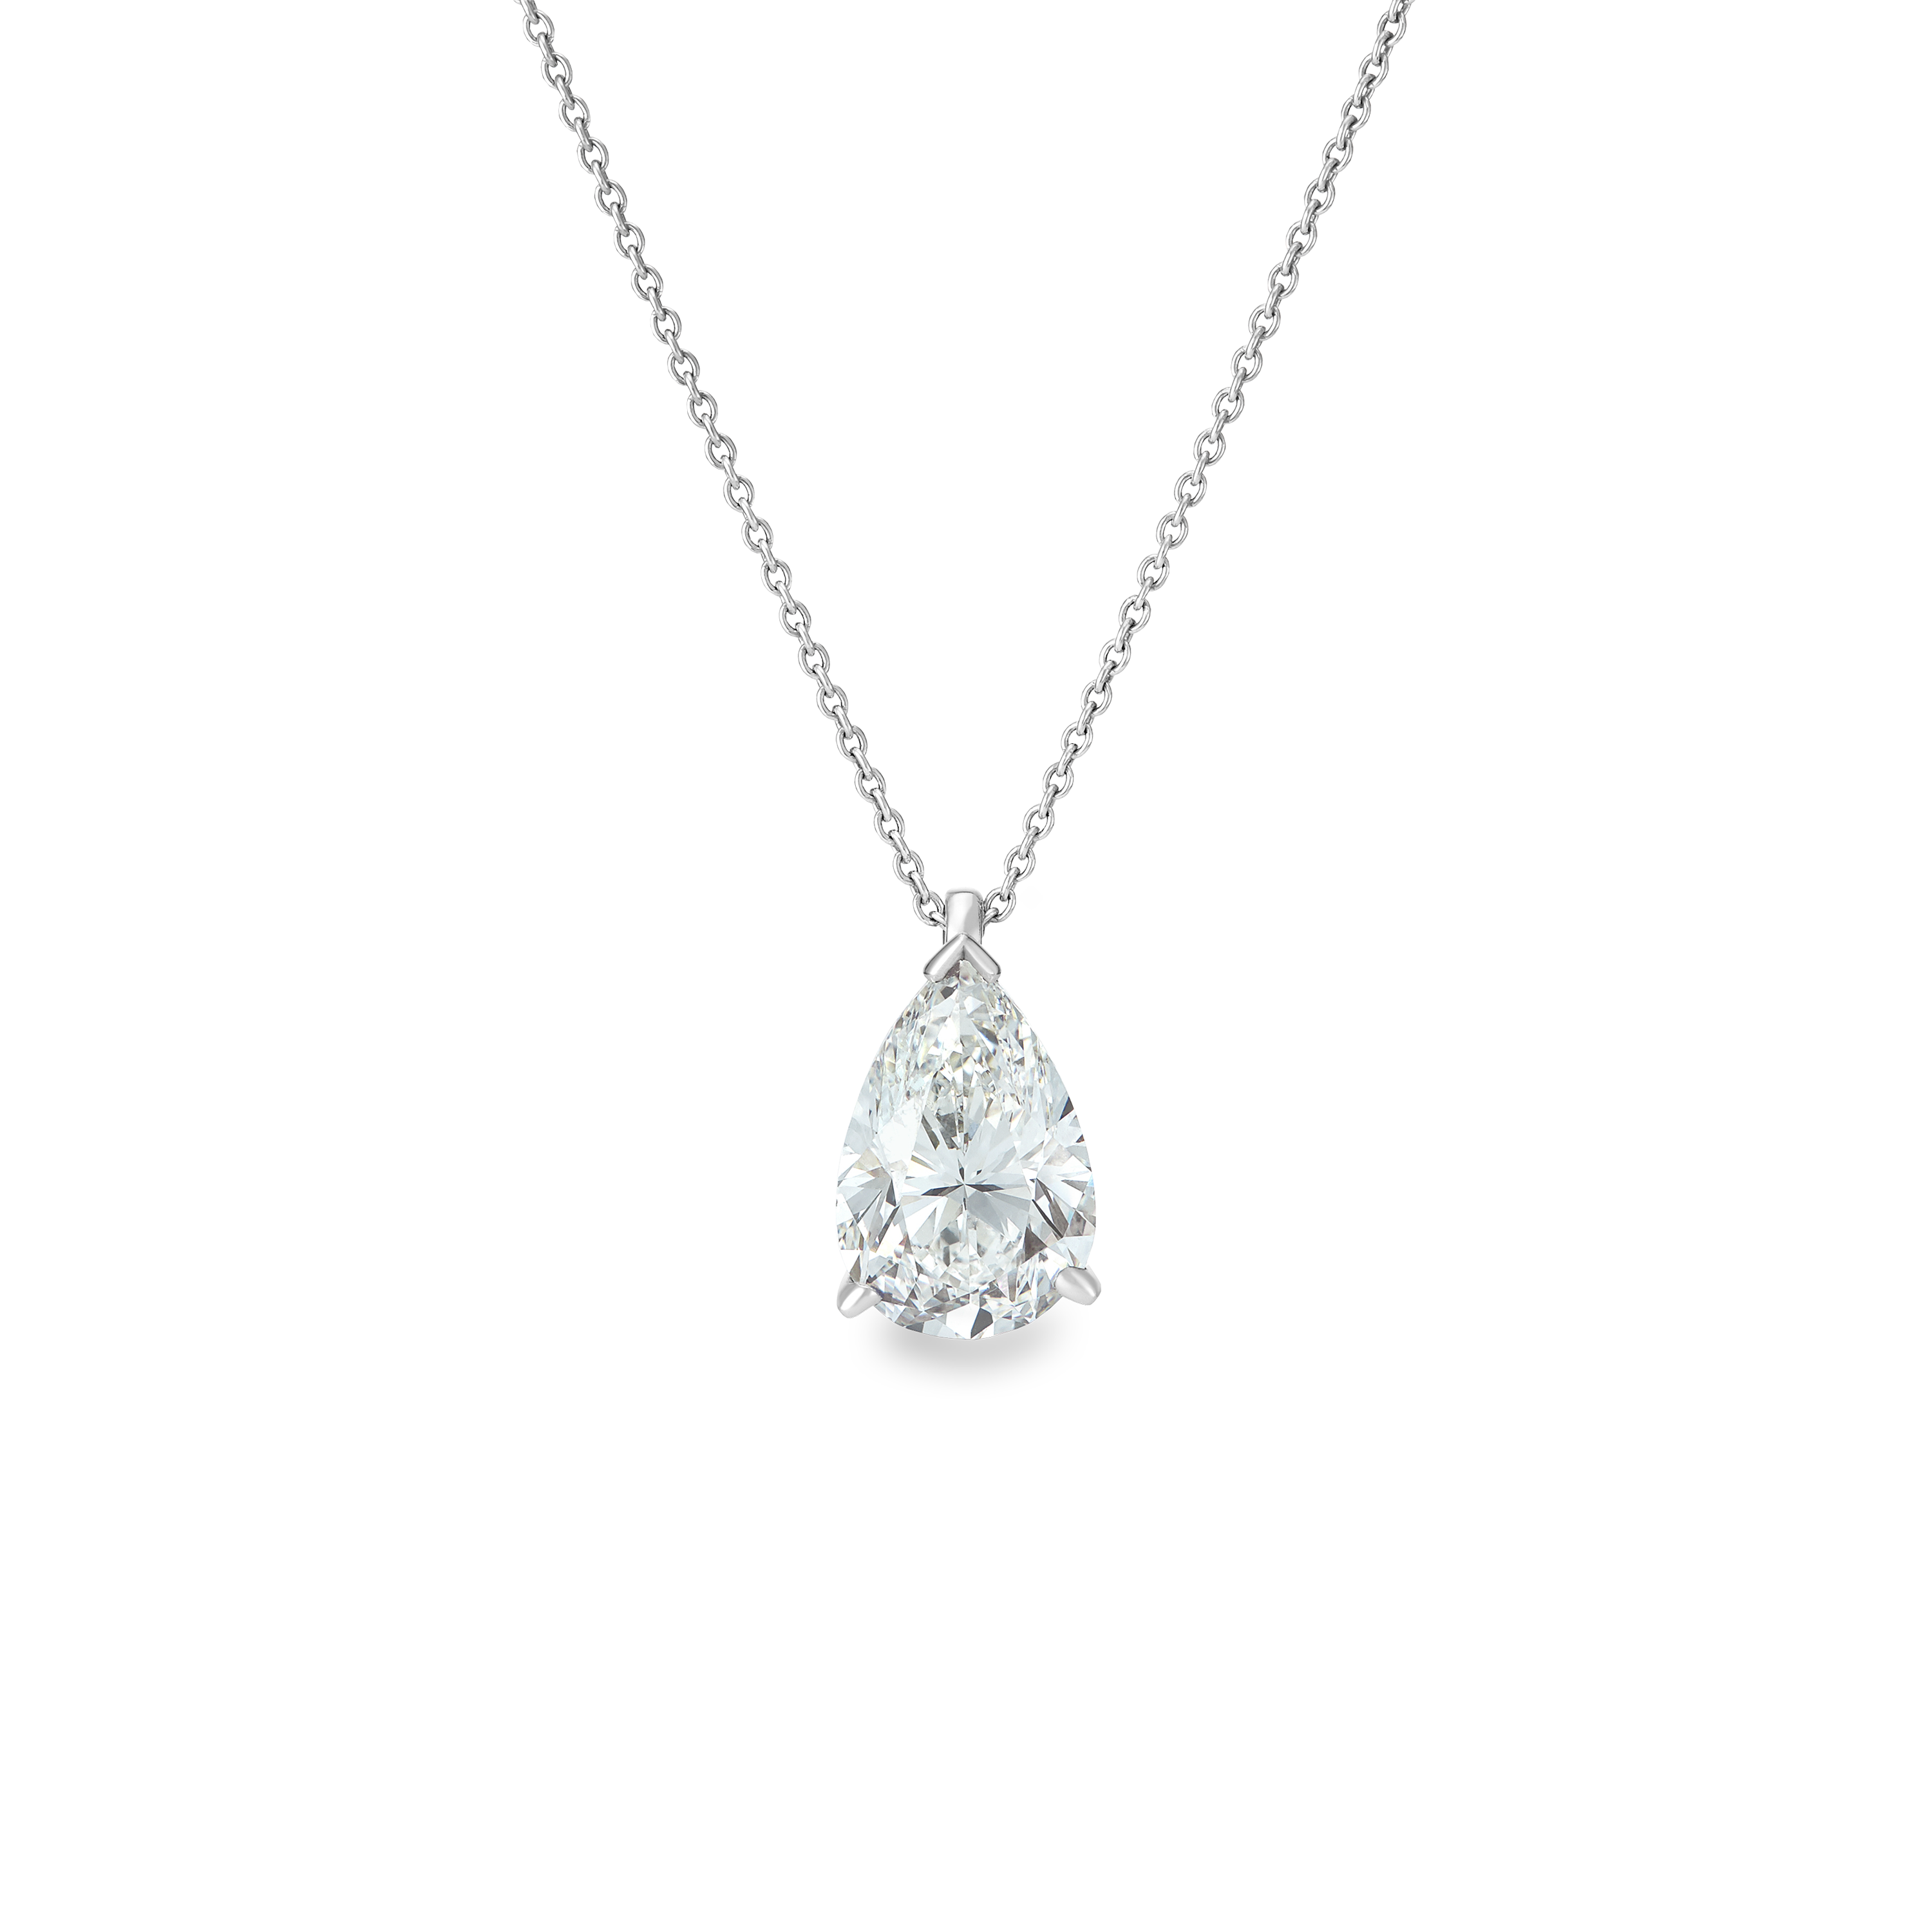 DB Classic pear-shaped diamond pendant, image 1